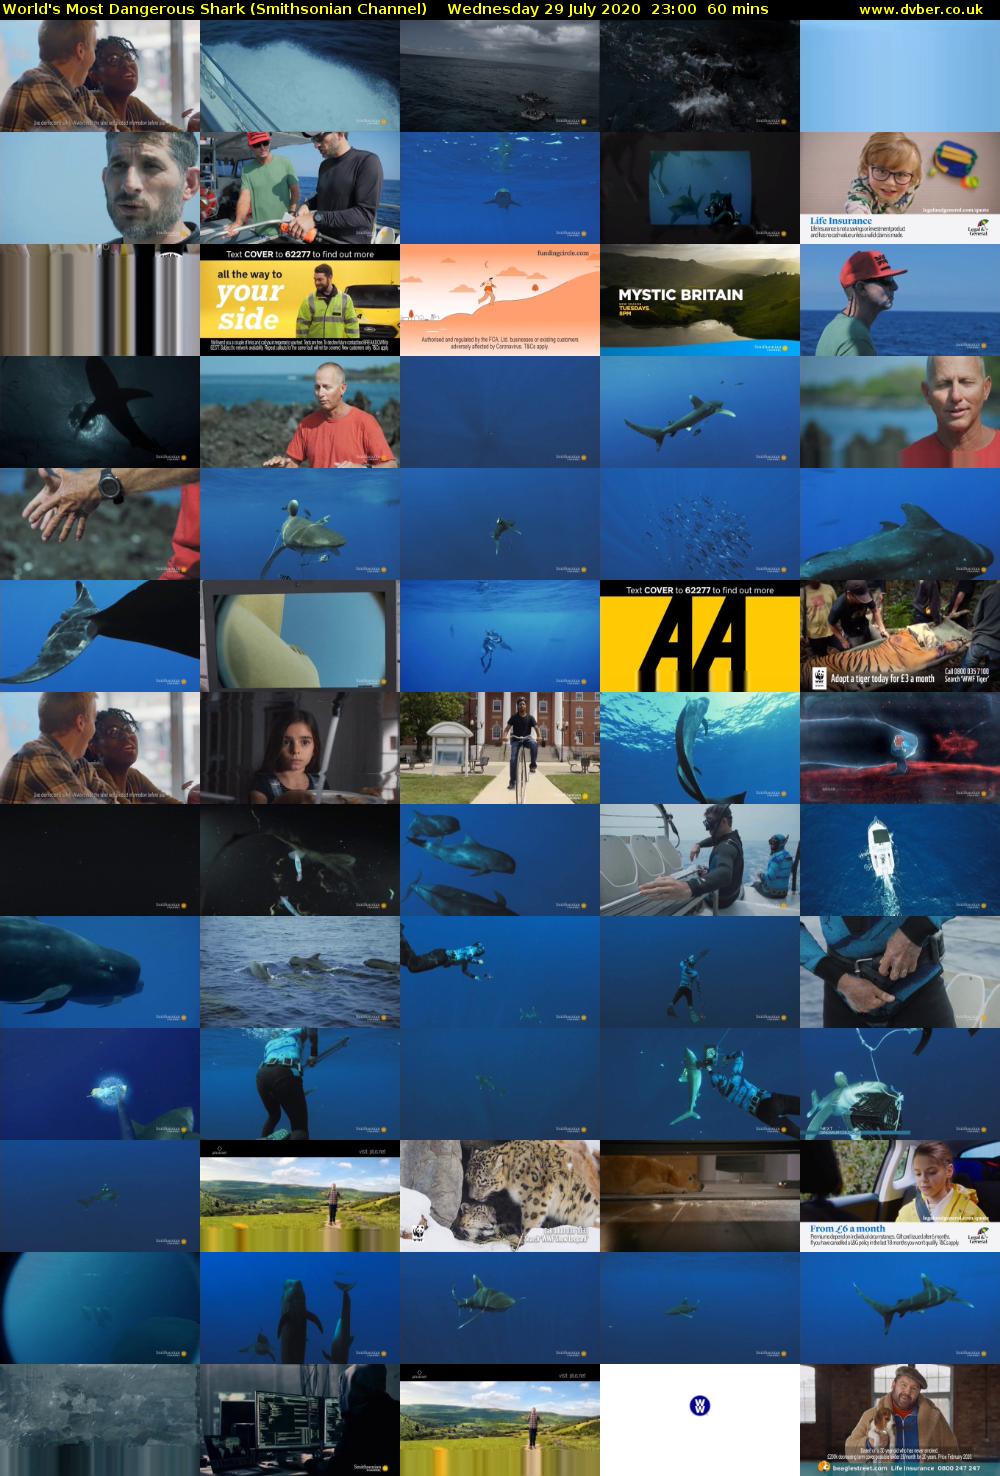 World's Most Dangerous Shark (Smithsonian Channel) Wednesday 29 July 2020 23:00 - 00:00